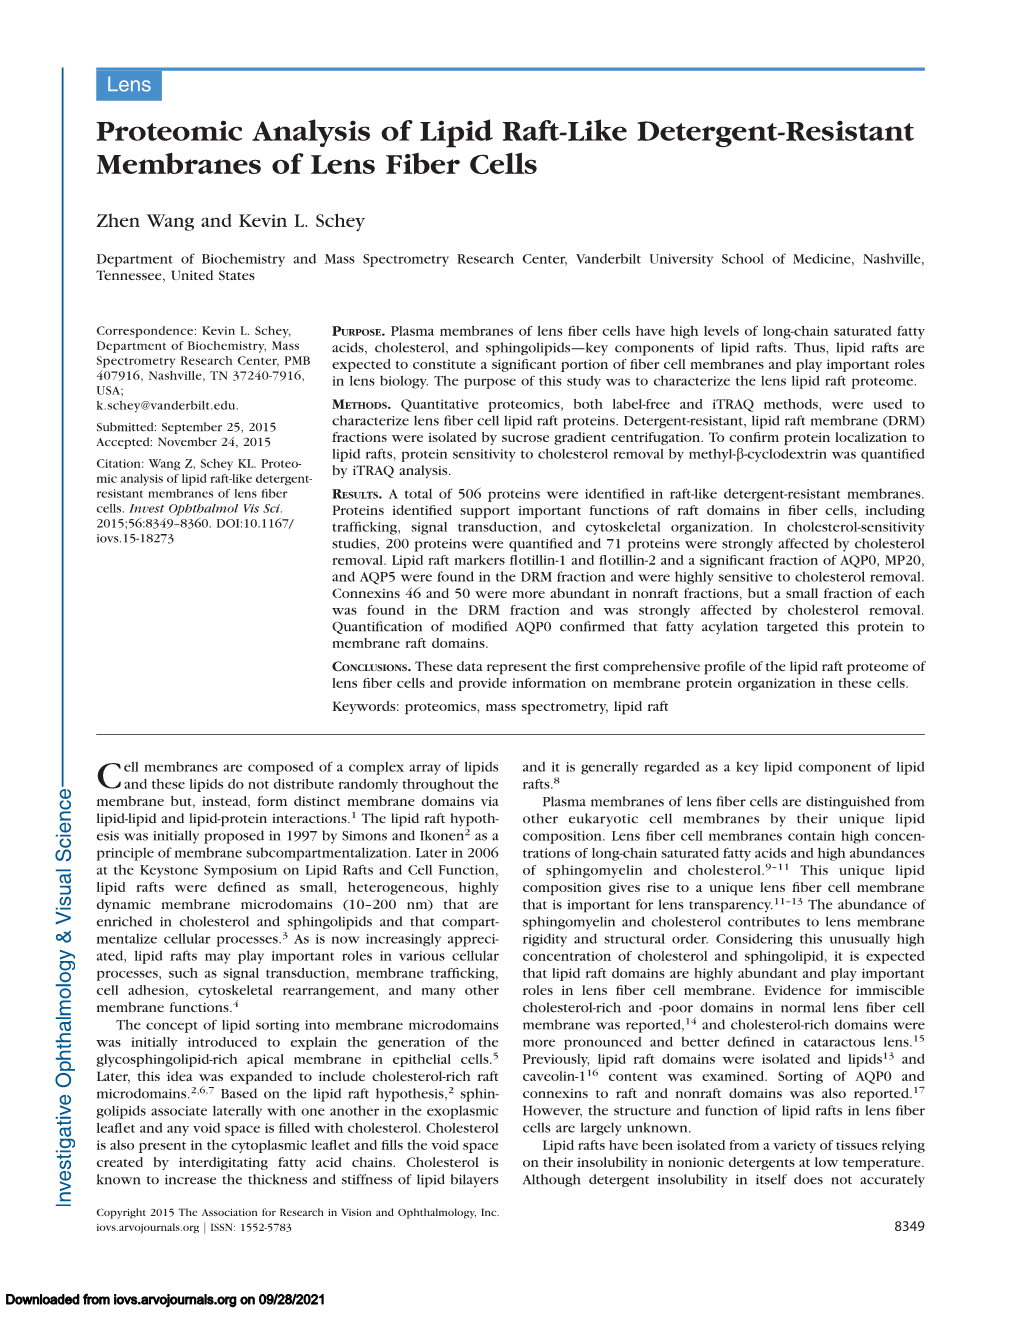 Proteomic Analysis of Lipid Raft-Like Detergent-Resistant Membranes of Lens Fiber Cells